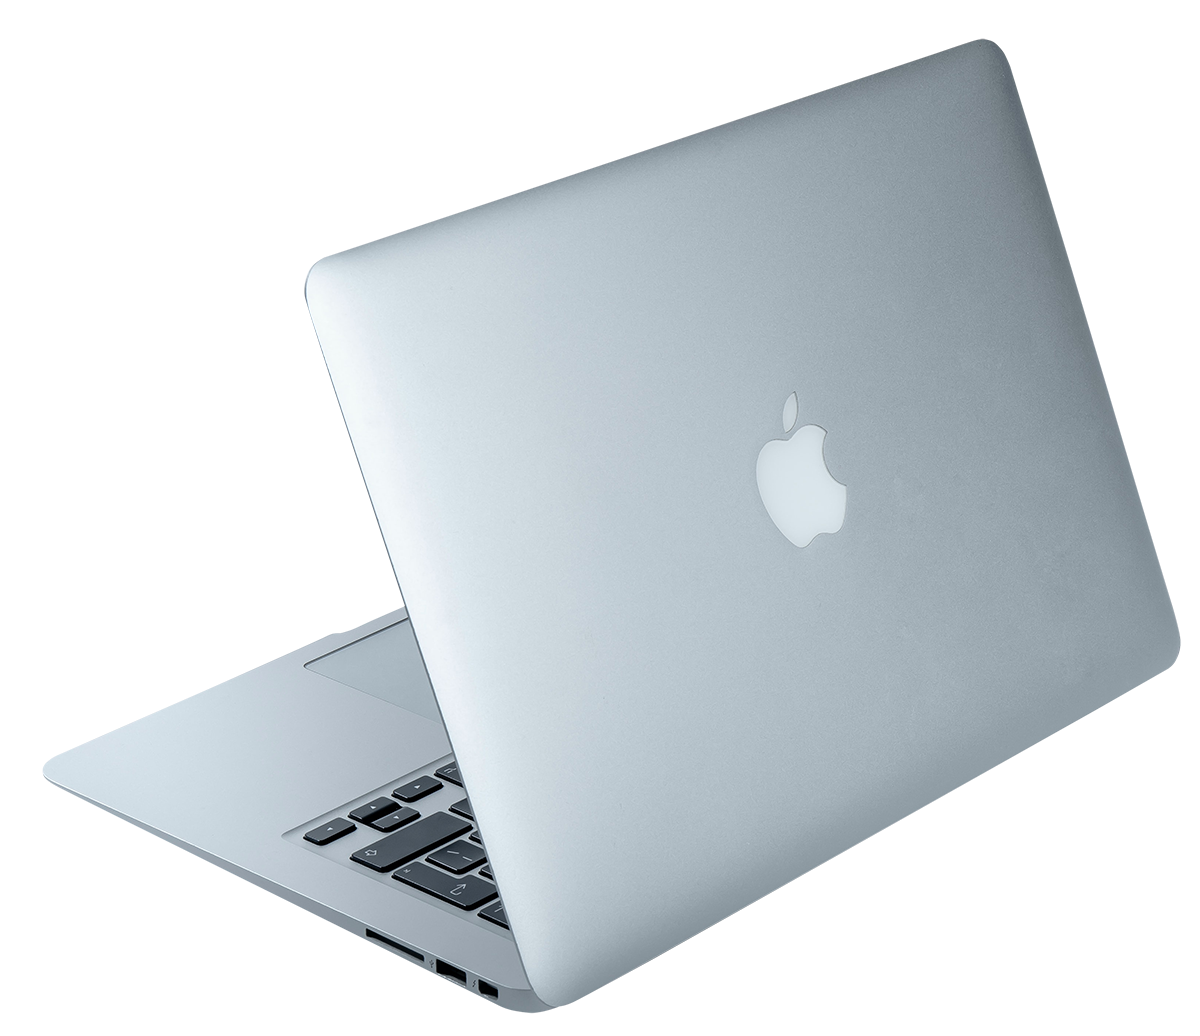 Free Apple laptop image, Apple laptop png, transparent Apple laptop png image, Apple laptop png hd images download